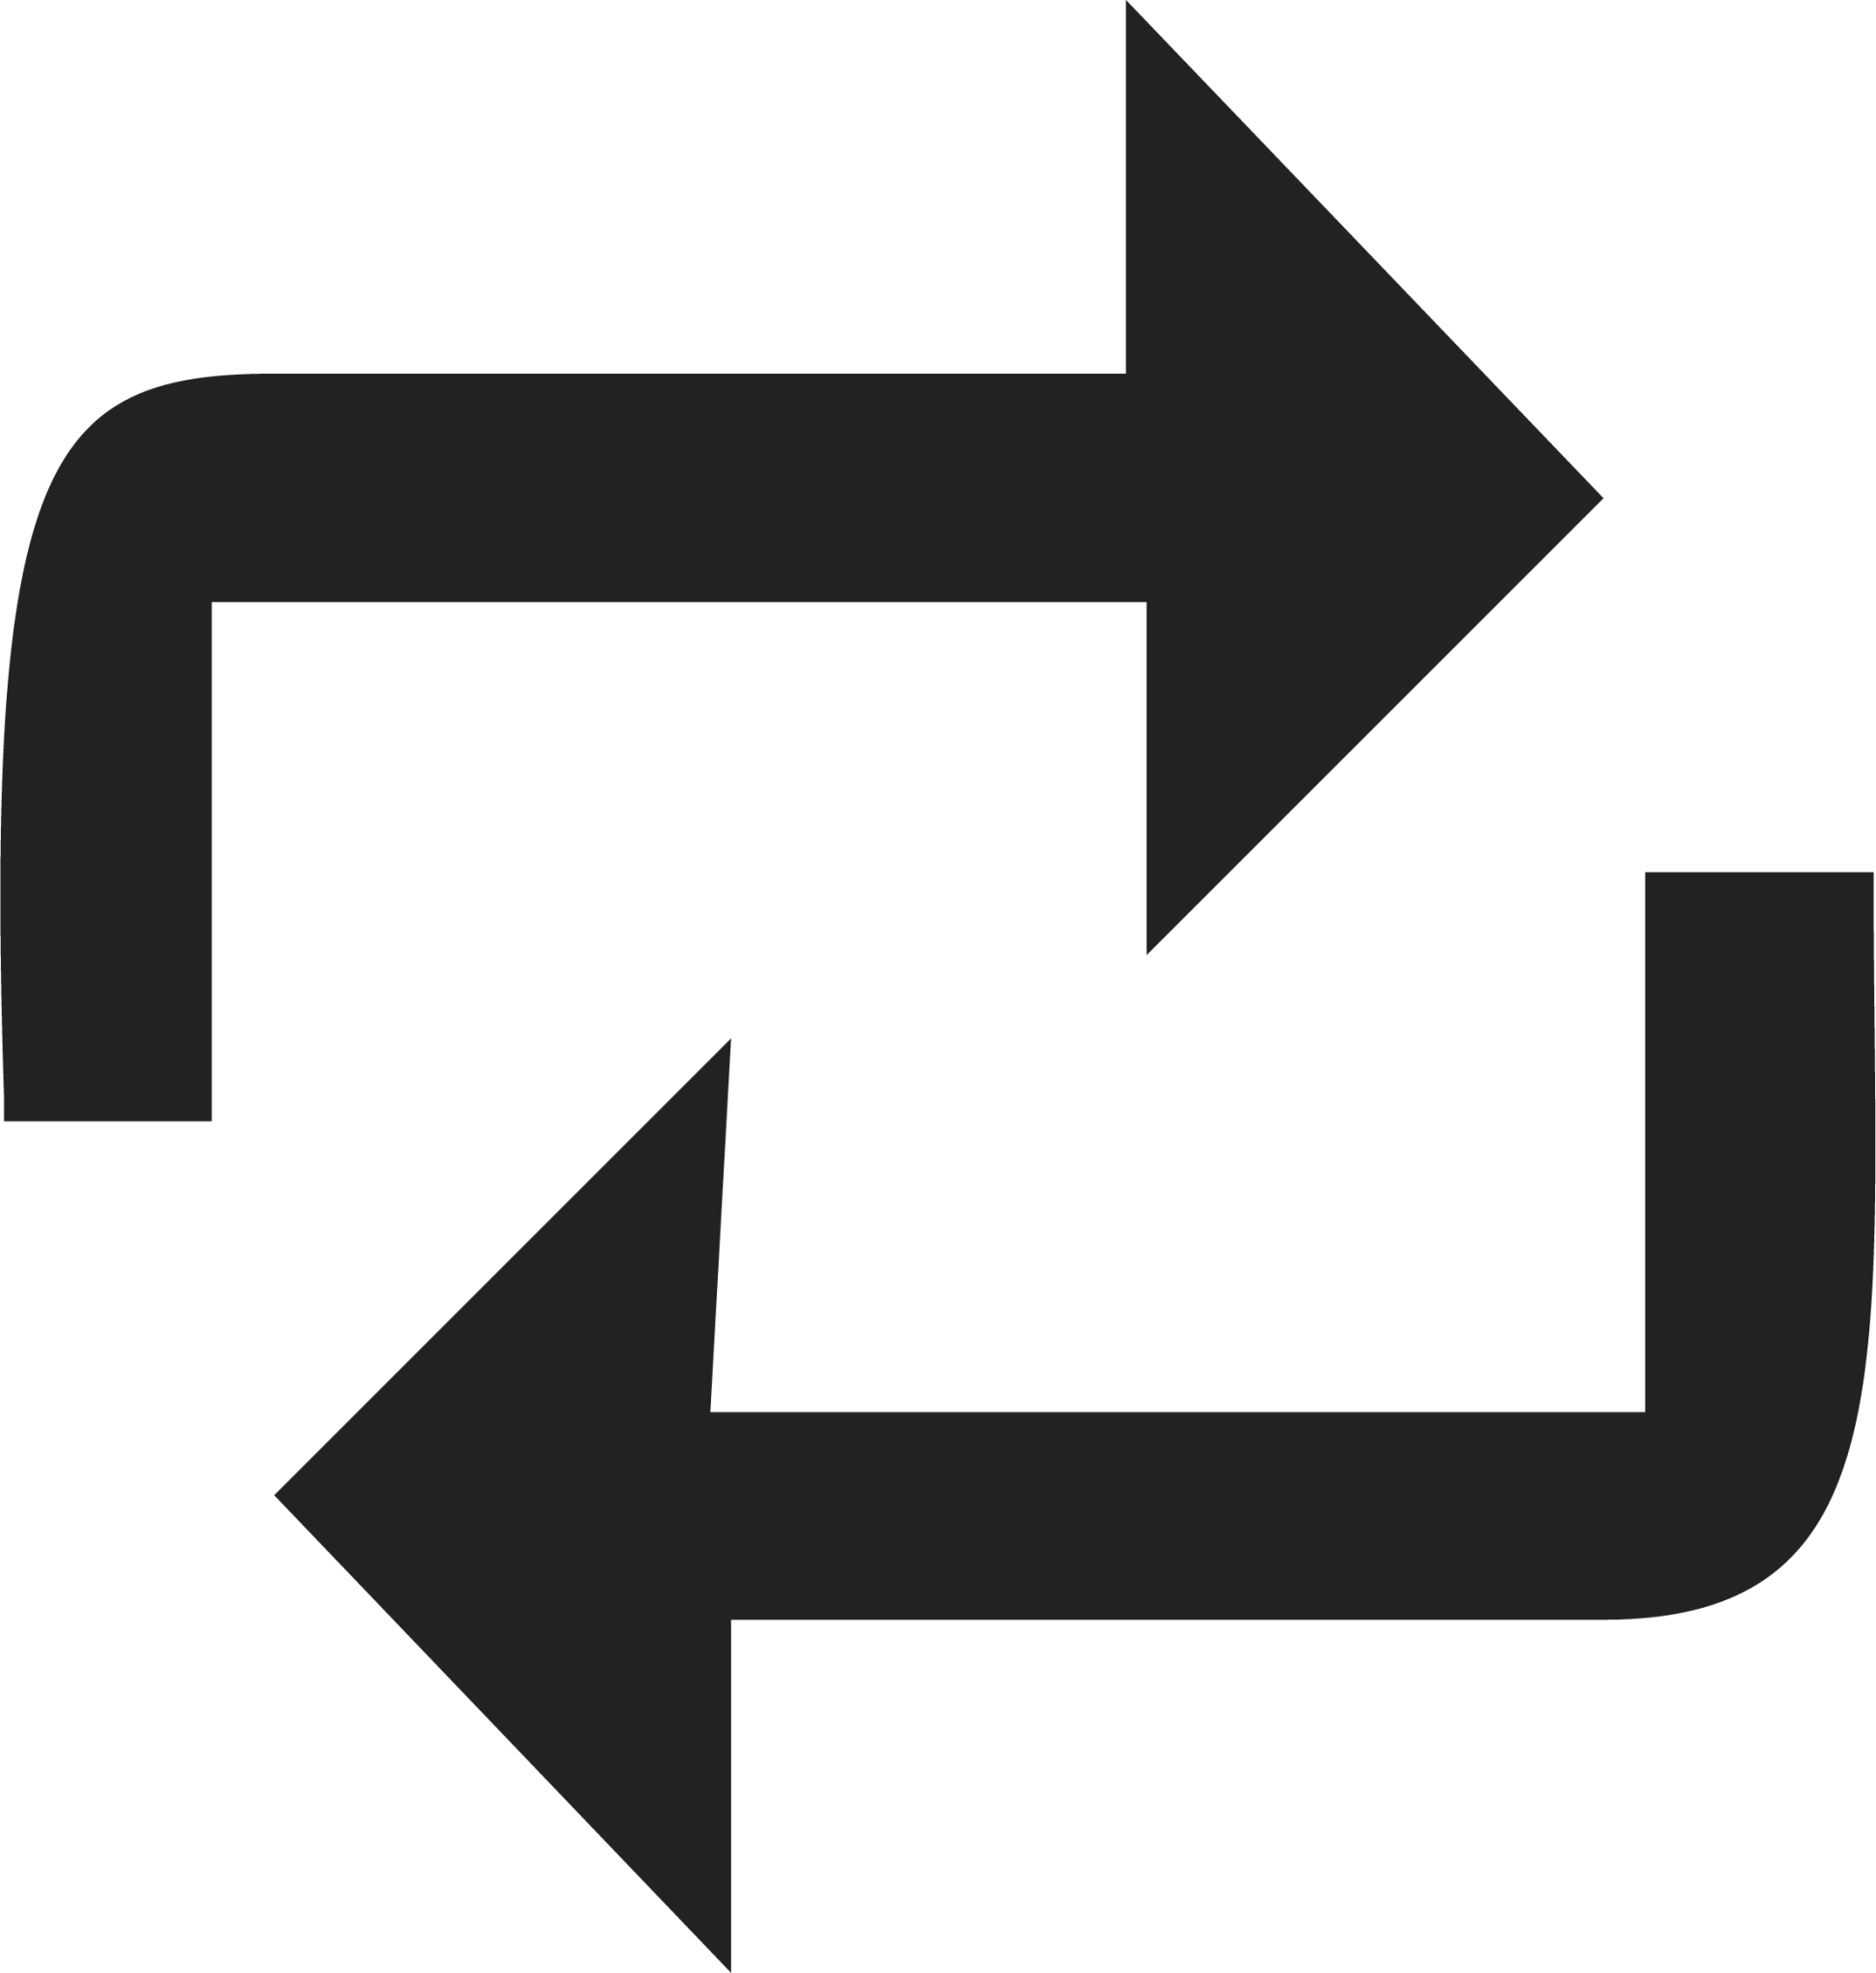 playmode loop icon